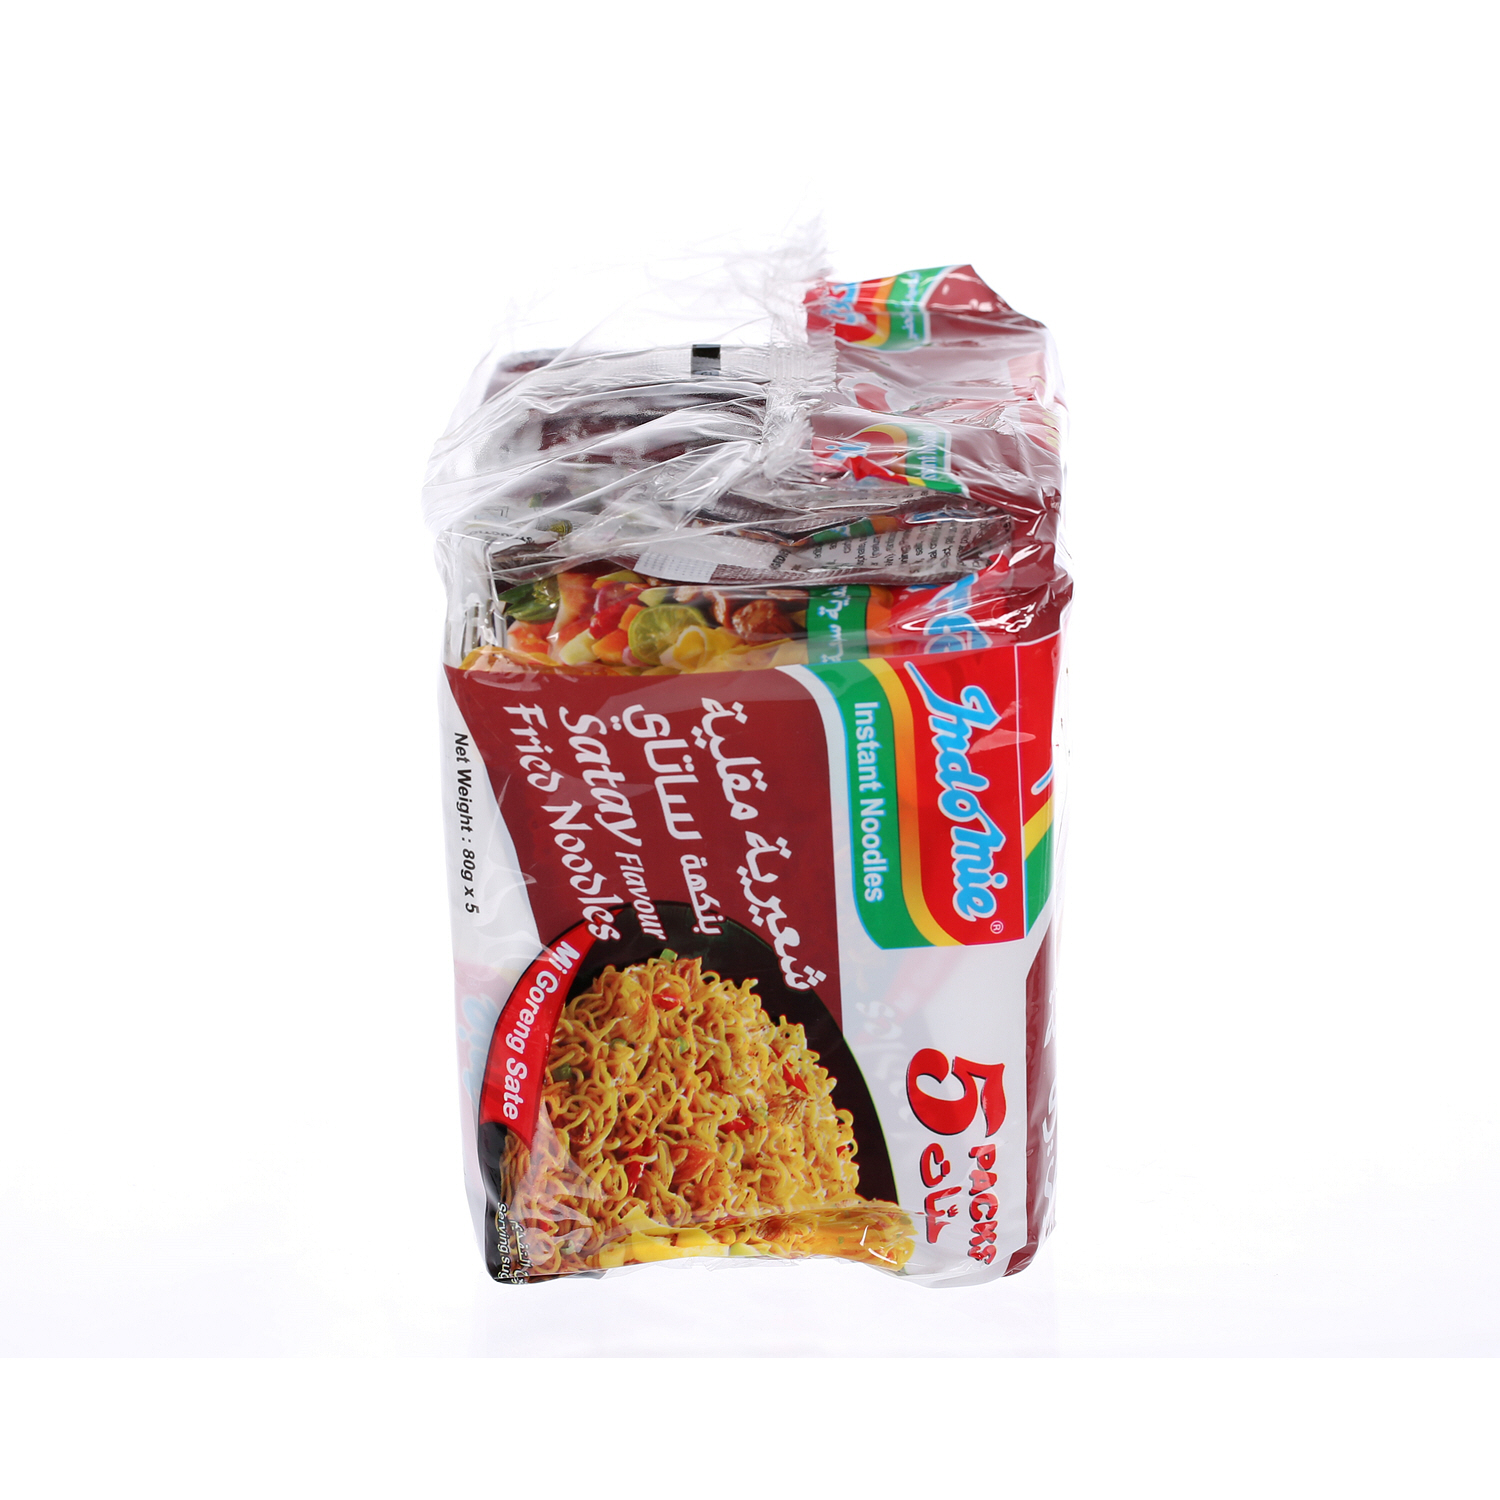 Indomie Noodles Satay Fried Flavor 75gm×5'S